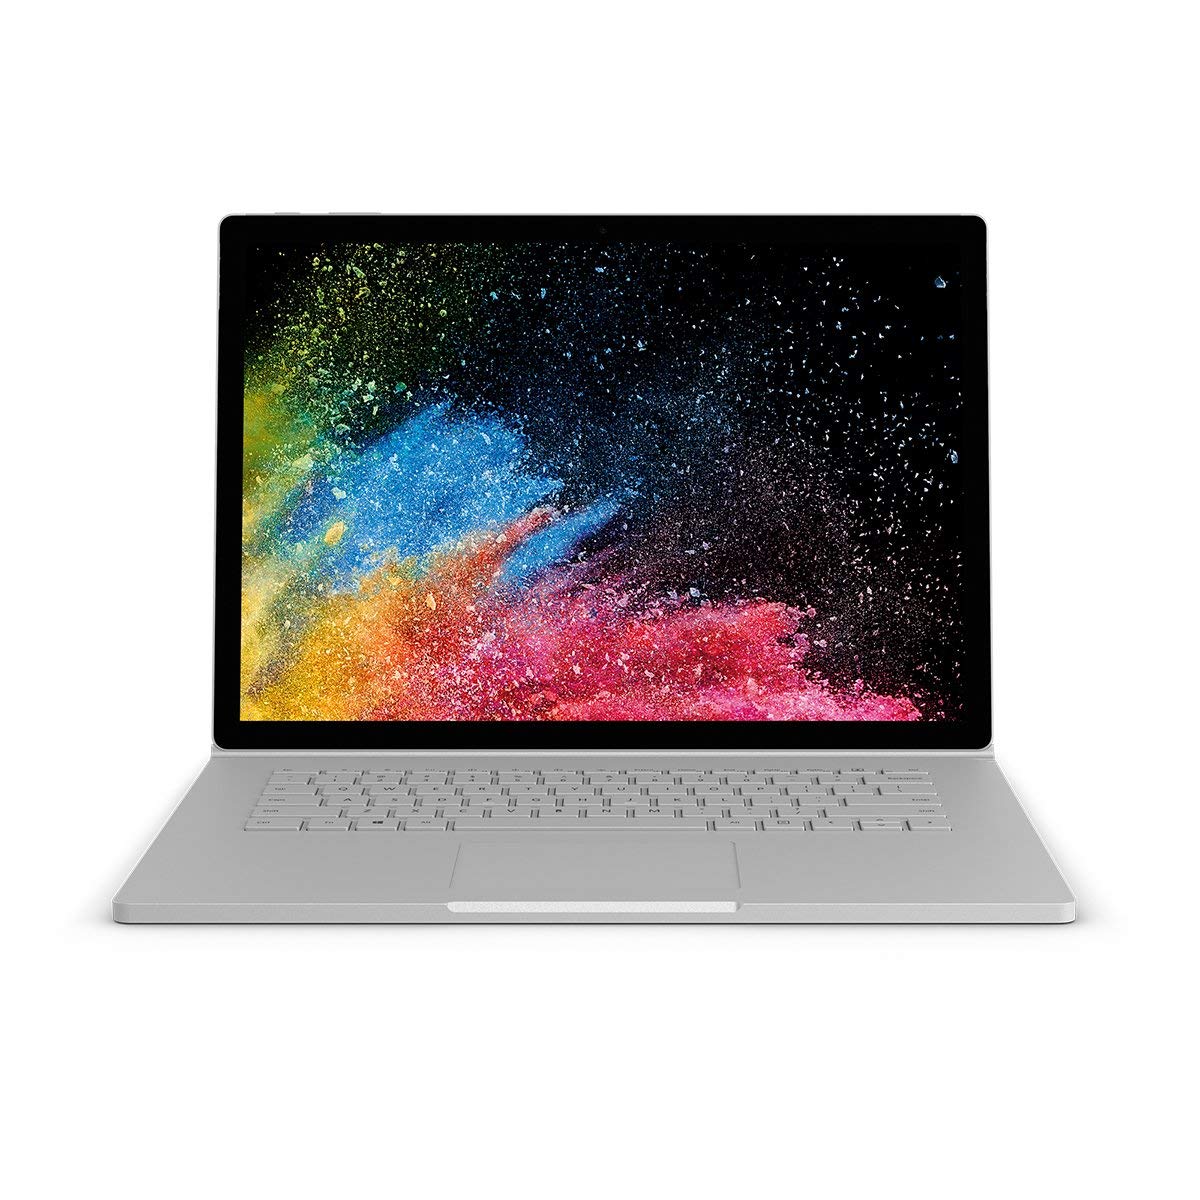 Computadora portátil de la marca Microsoft, modelo Surface Book 2